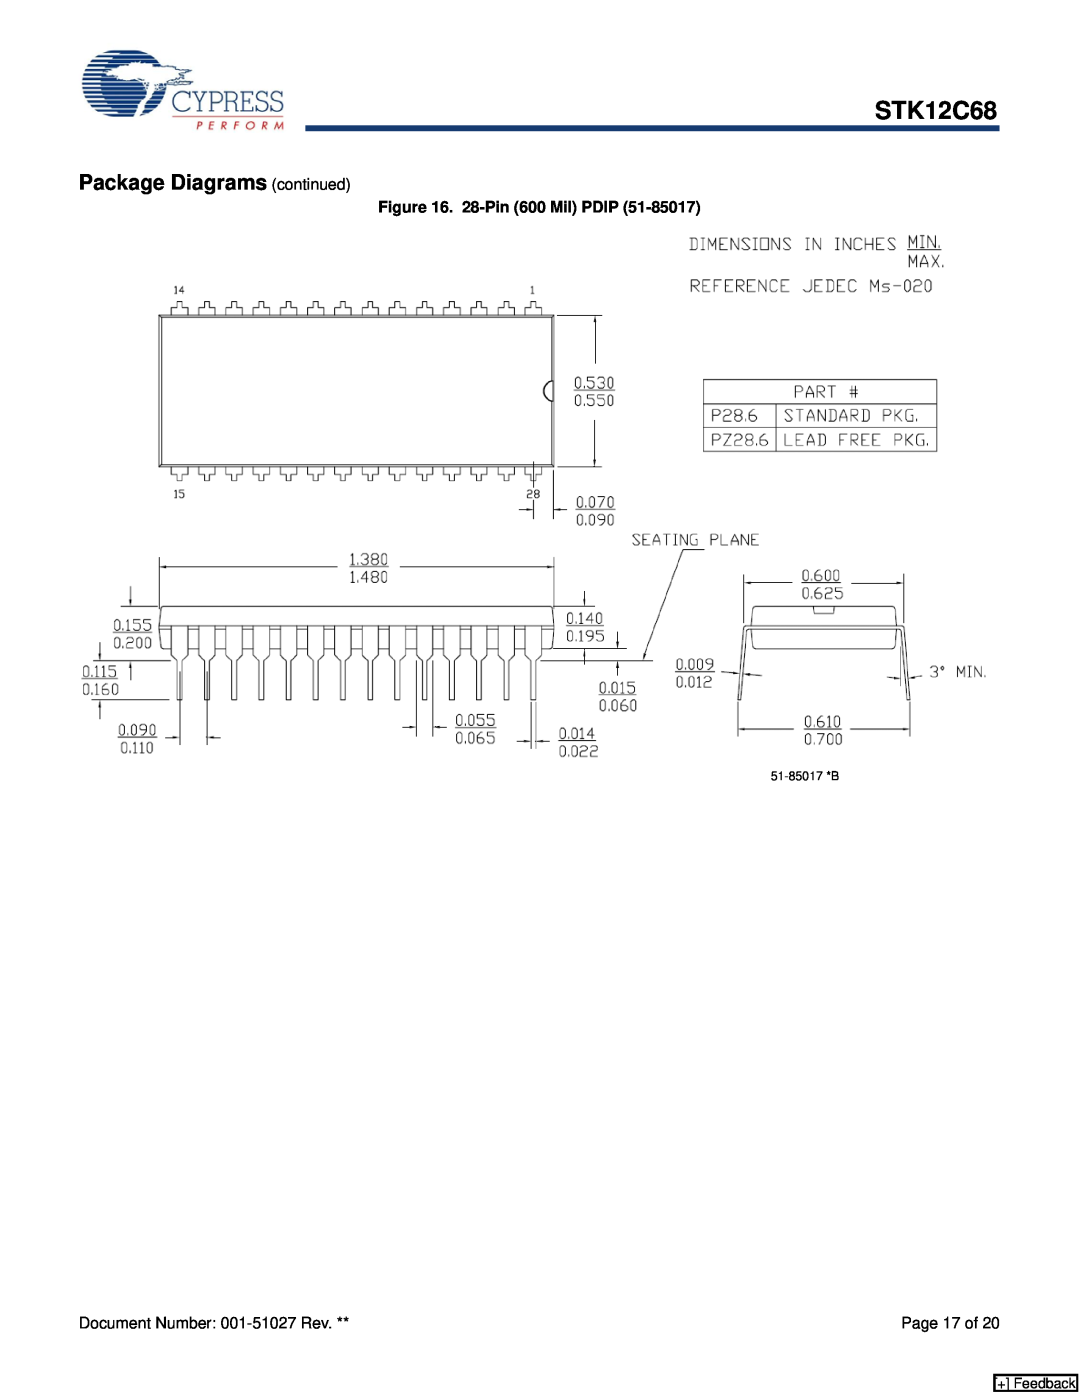 Cypress STK12C68 manual Package Diagrams continued, 28-Pin 600 Mil PDIP, + Feedback 